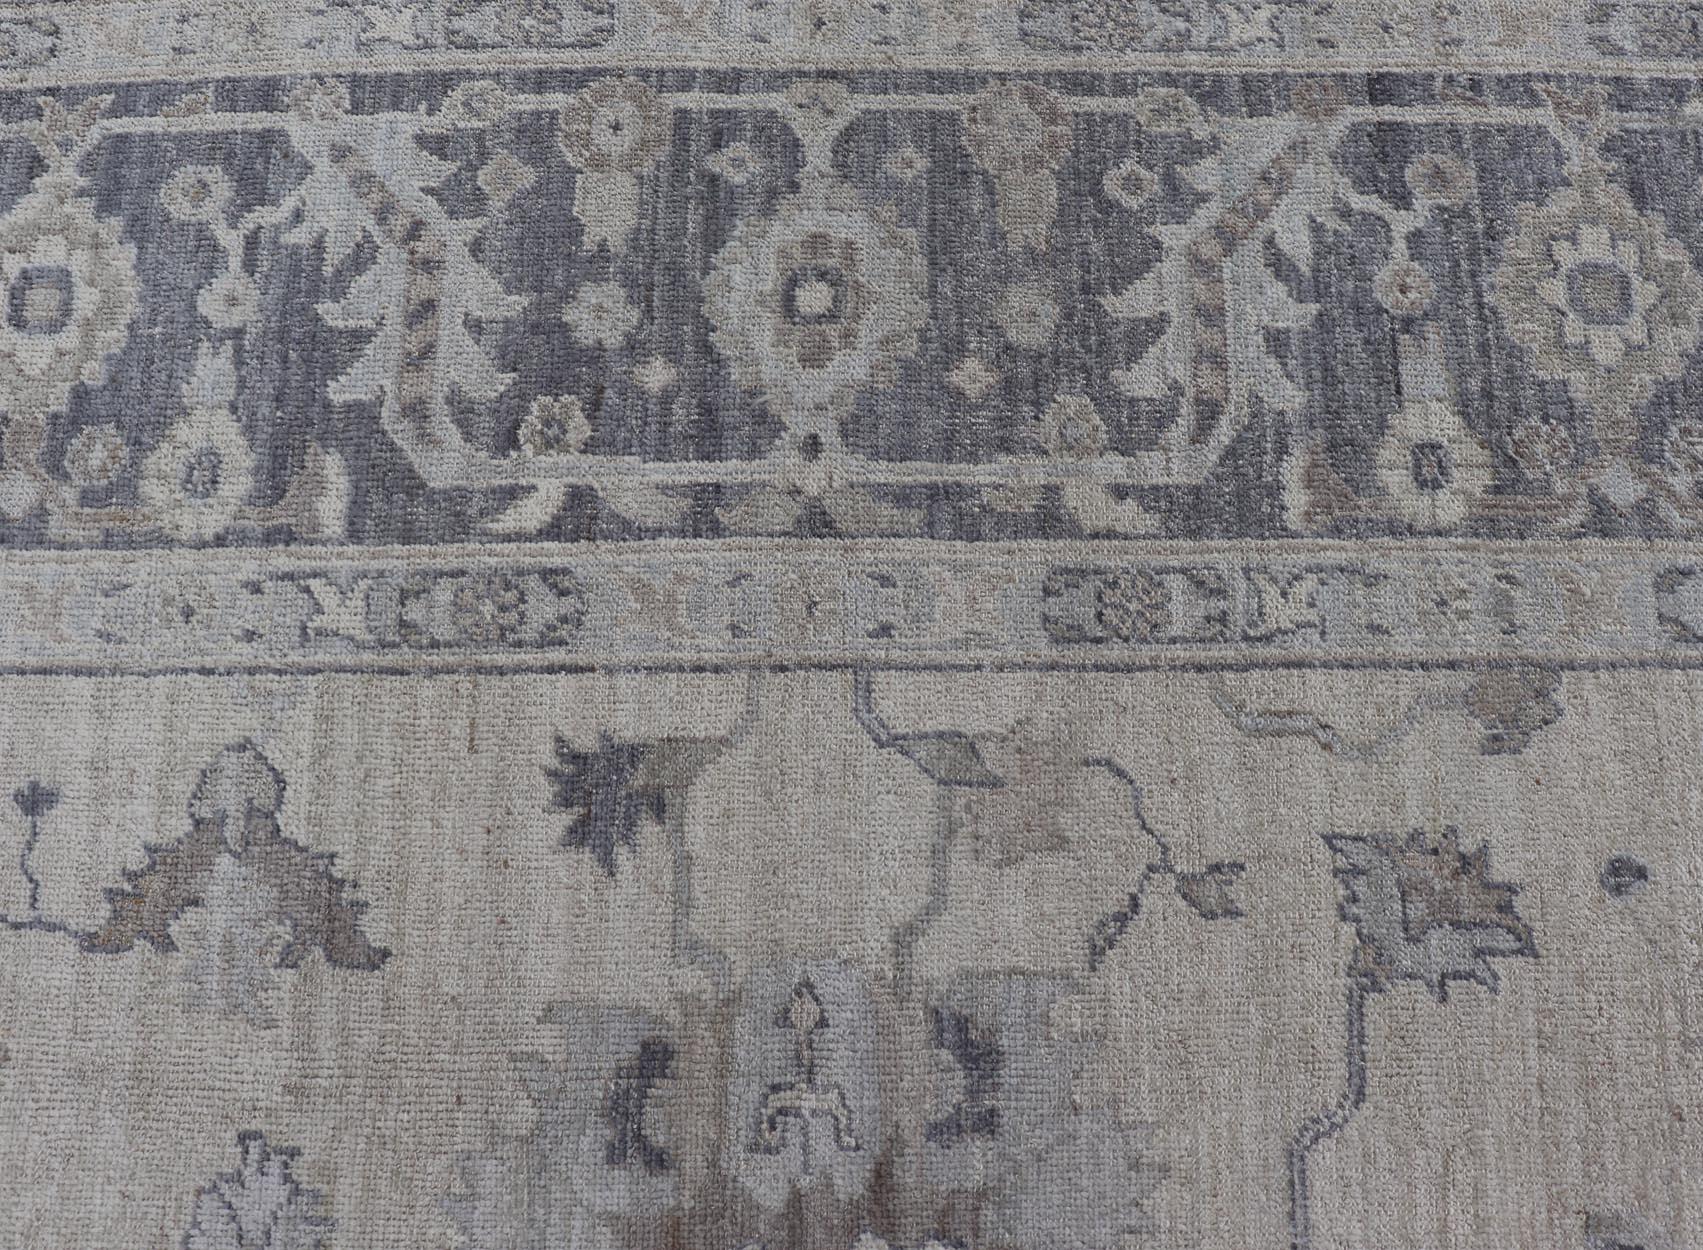 Shades of gray Angora Ushak rug from Turkey, Keivan Woven Arts 
 rug AN-126211, country of origin / type: Turkey / Angora Oushak.

Measures: 12'9 x 14'11